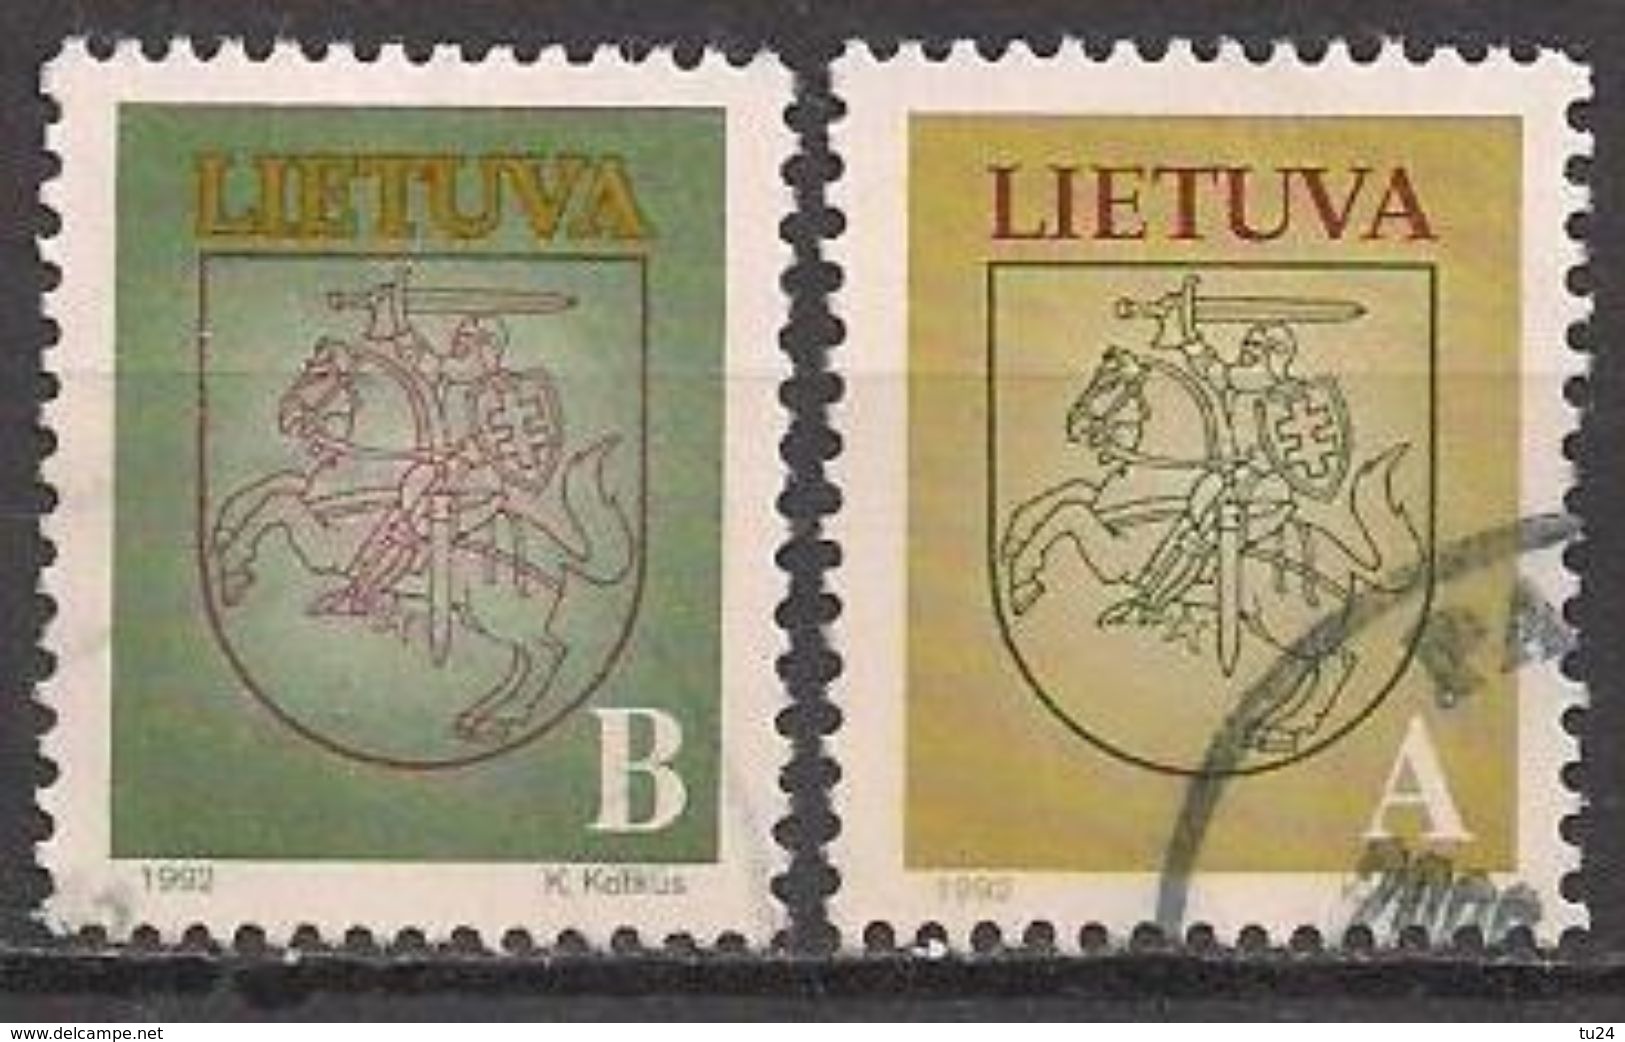 Litauen  (1993)  Mi.Nr.  531 + 532  Gest. / Used  (2ee04) - Lithuania